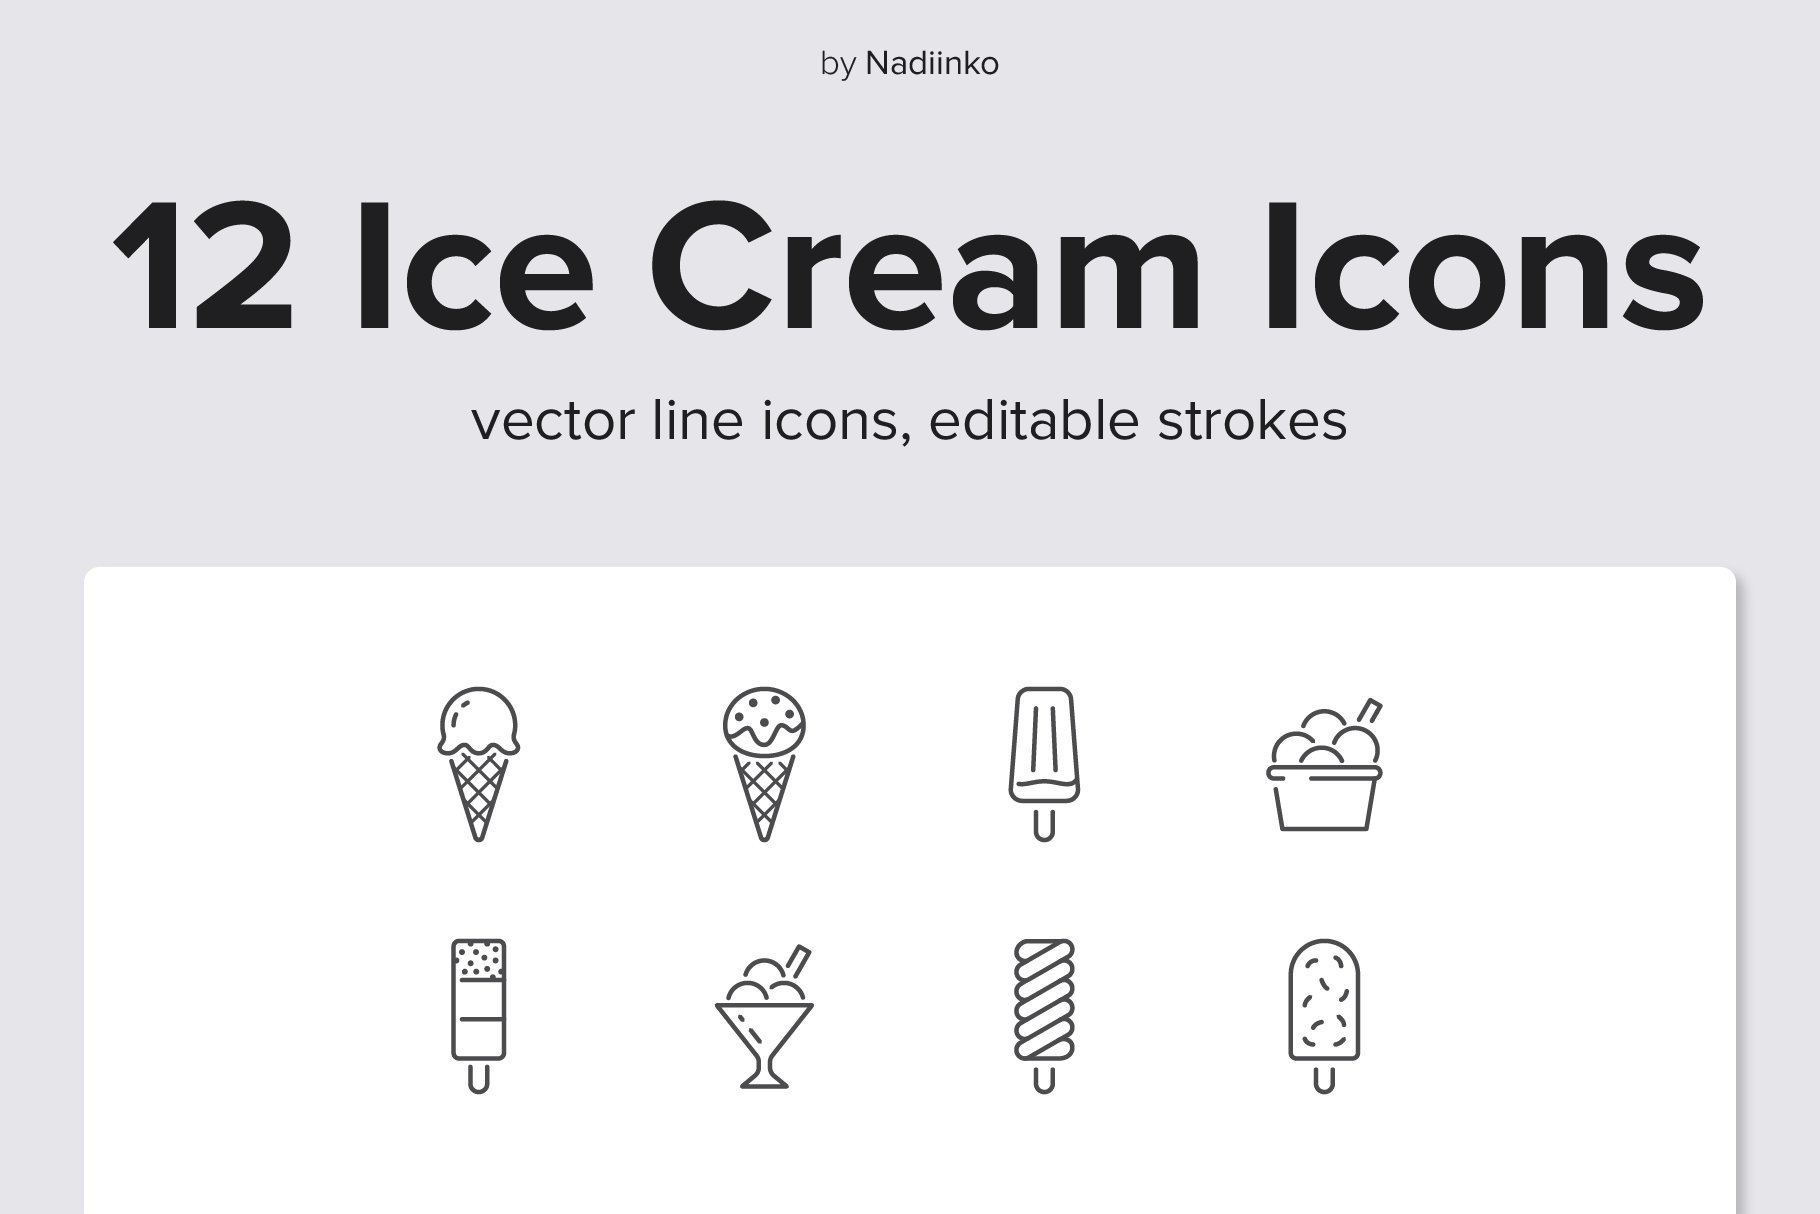 Ice Cream Line Icons cover image.